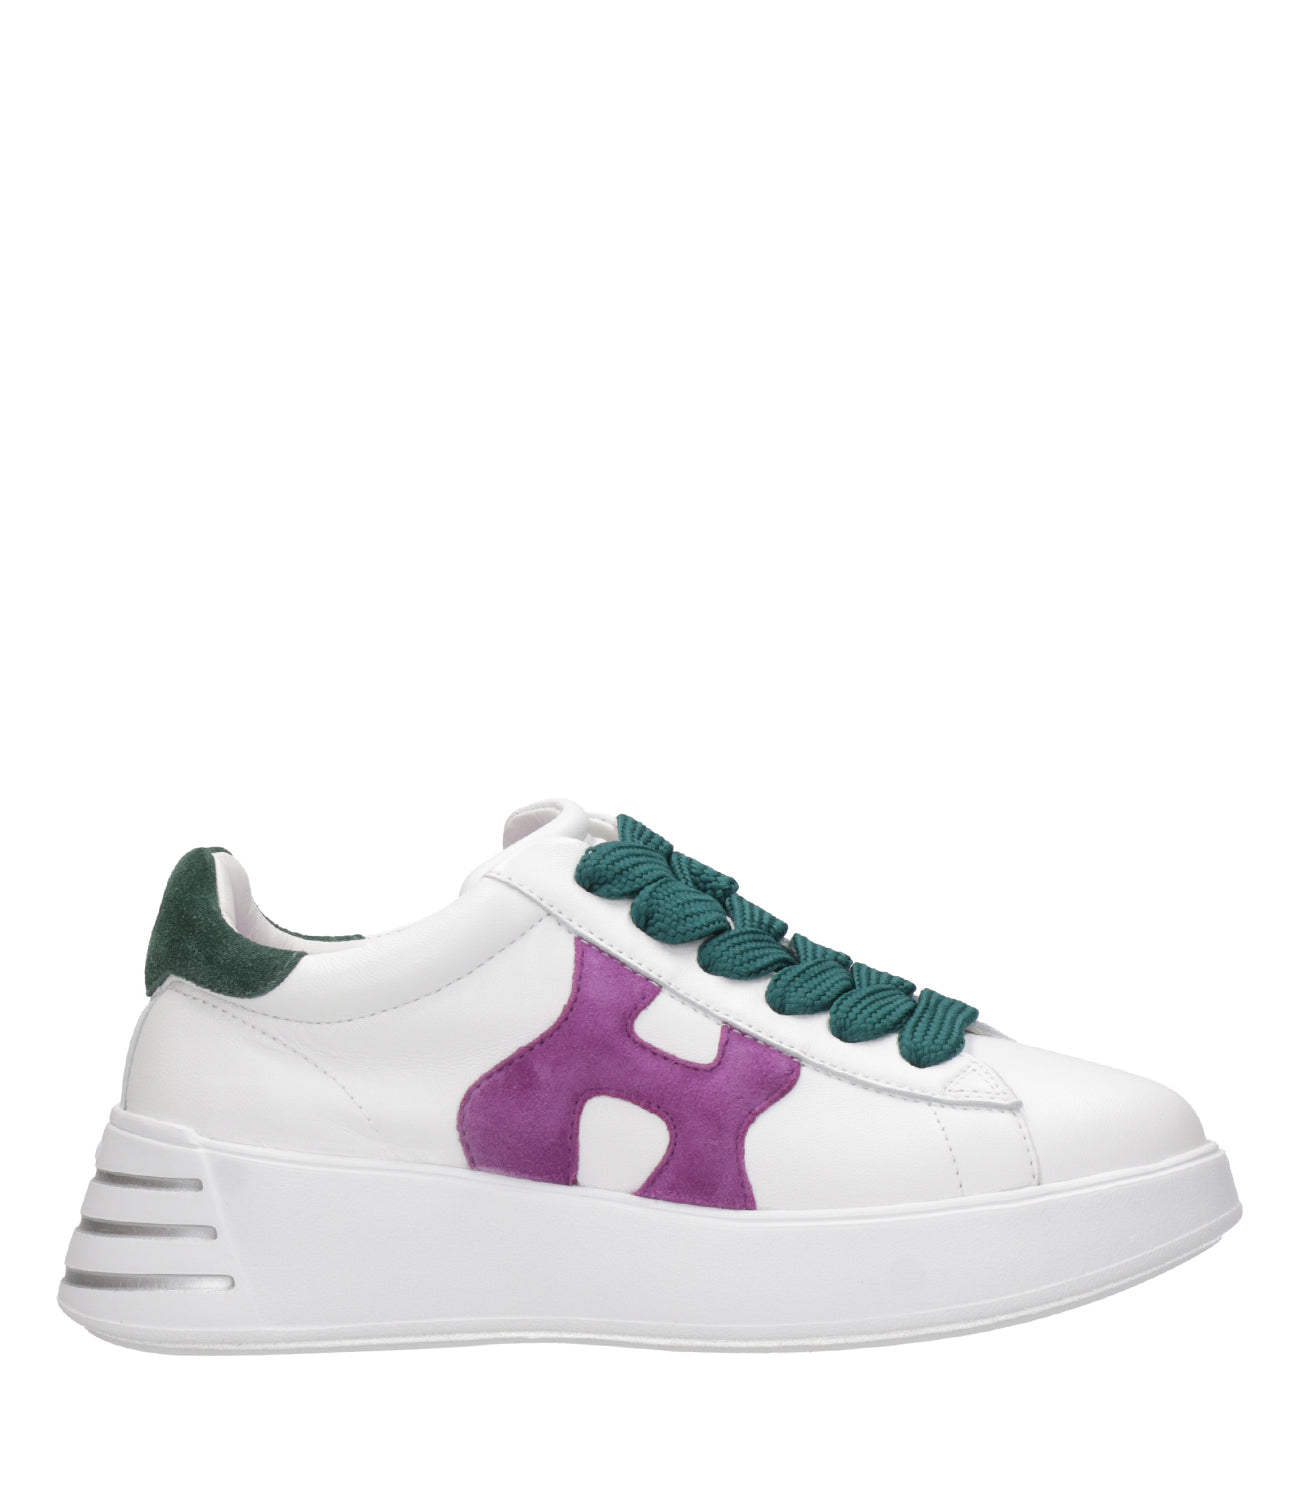 Hogan | Rebel Sneakers H564 White, Purple and Green